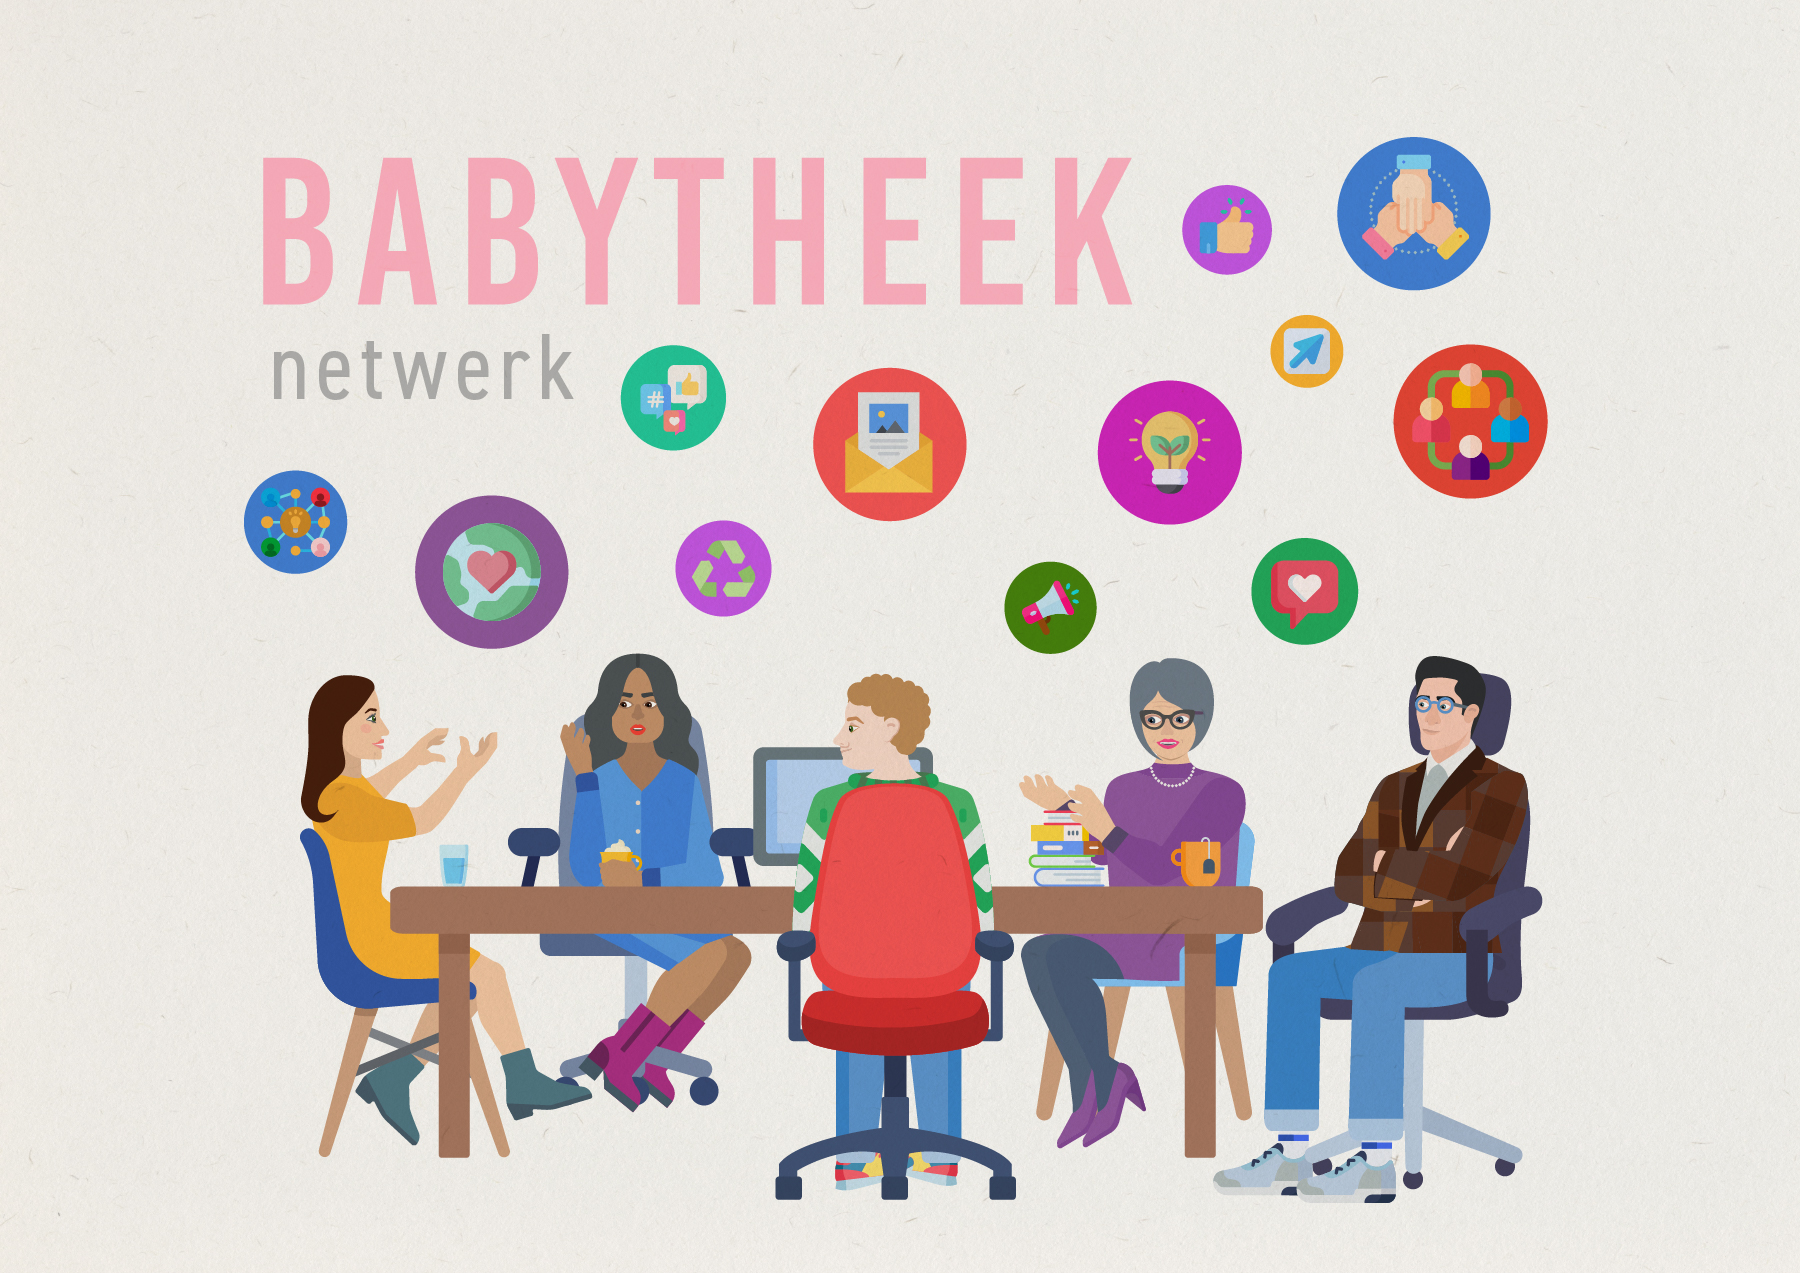 Babytheek Netwerk illustration